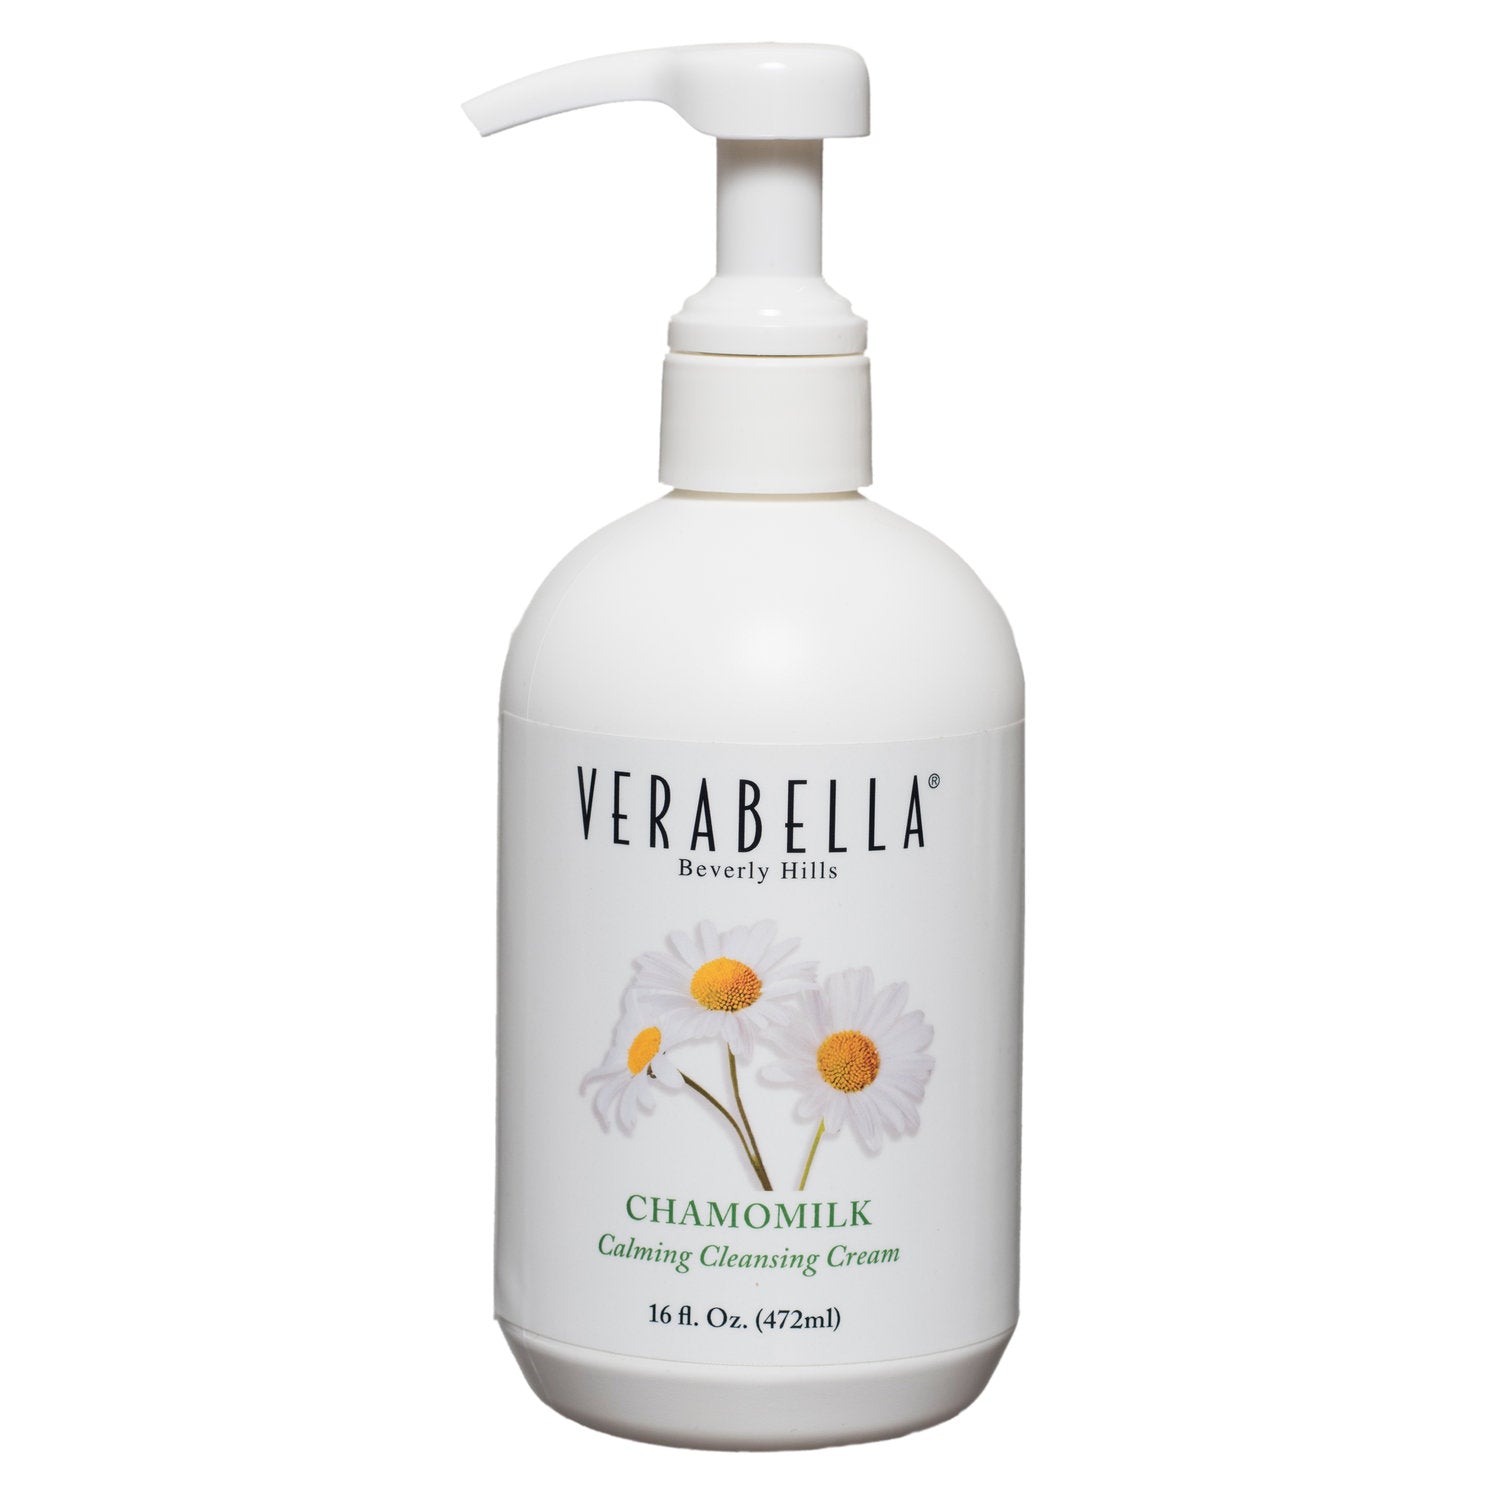 Verabella Chamomilk 16 oz Cleanser product image